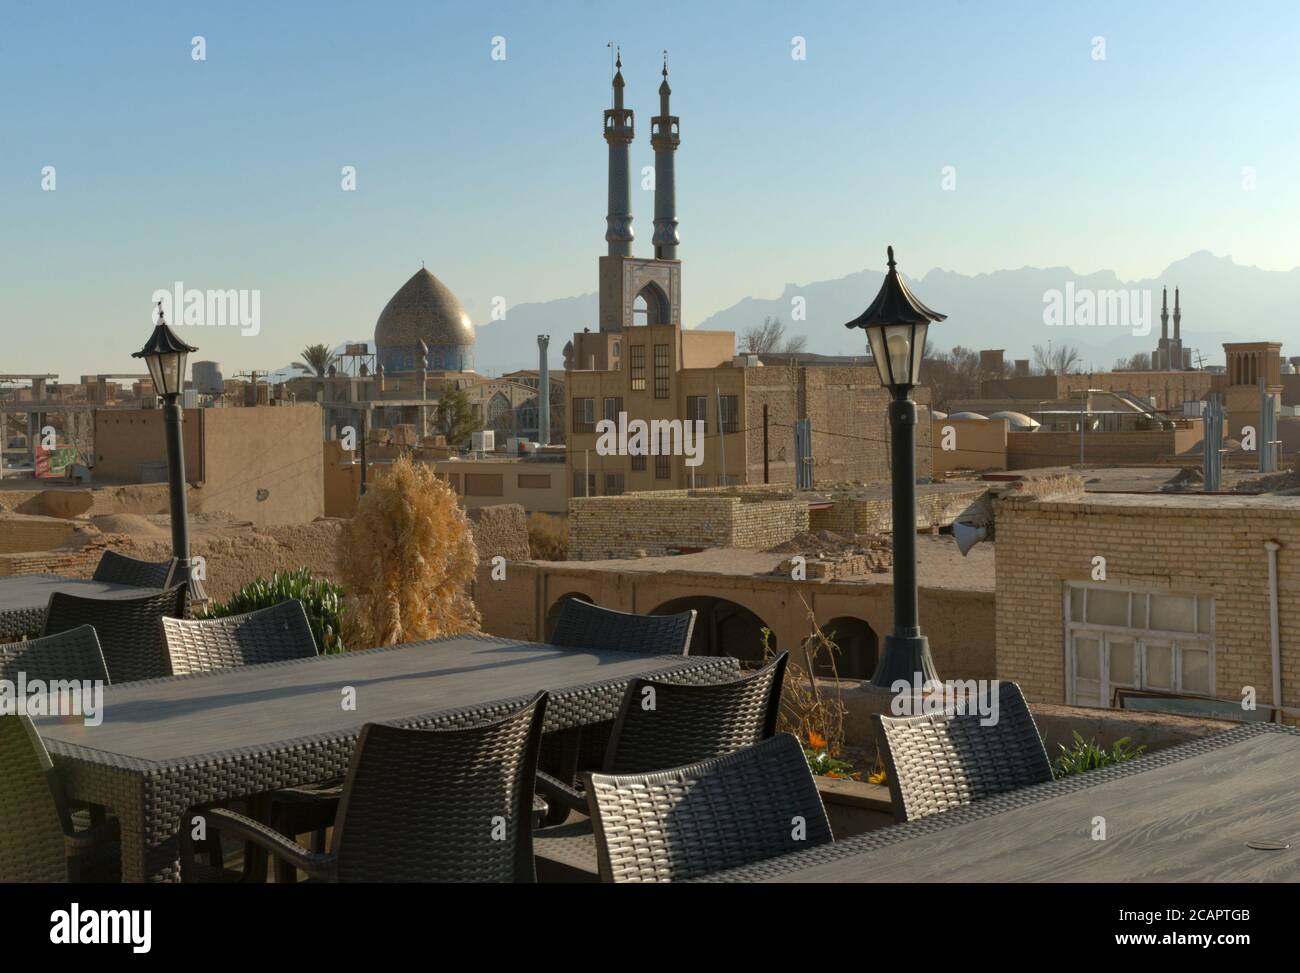 Silk road Muslim city skyline from bazaar rooftops, Yazd, Iran Stock Photo